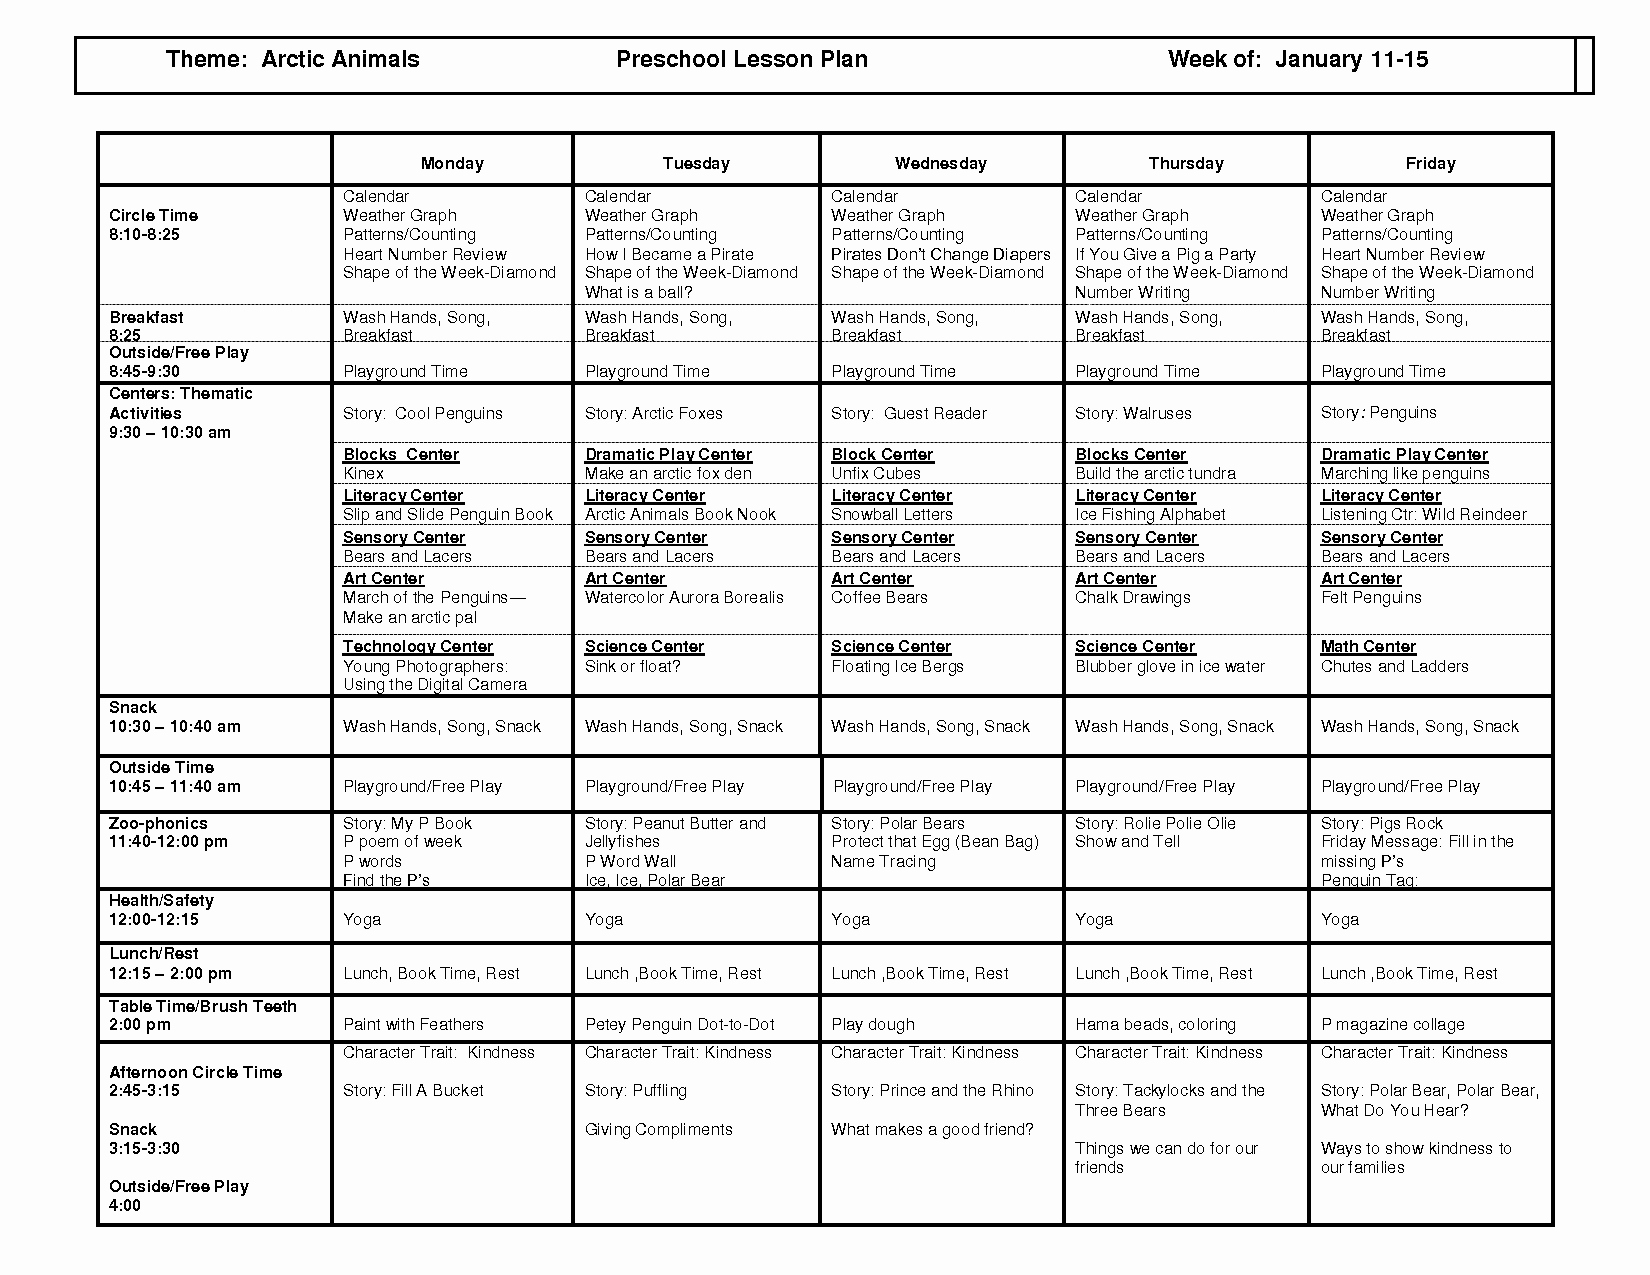 Printable Weekly Lesson Plan Template Fresh Free Weekly Lesson Plan Template and Teacher Resources